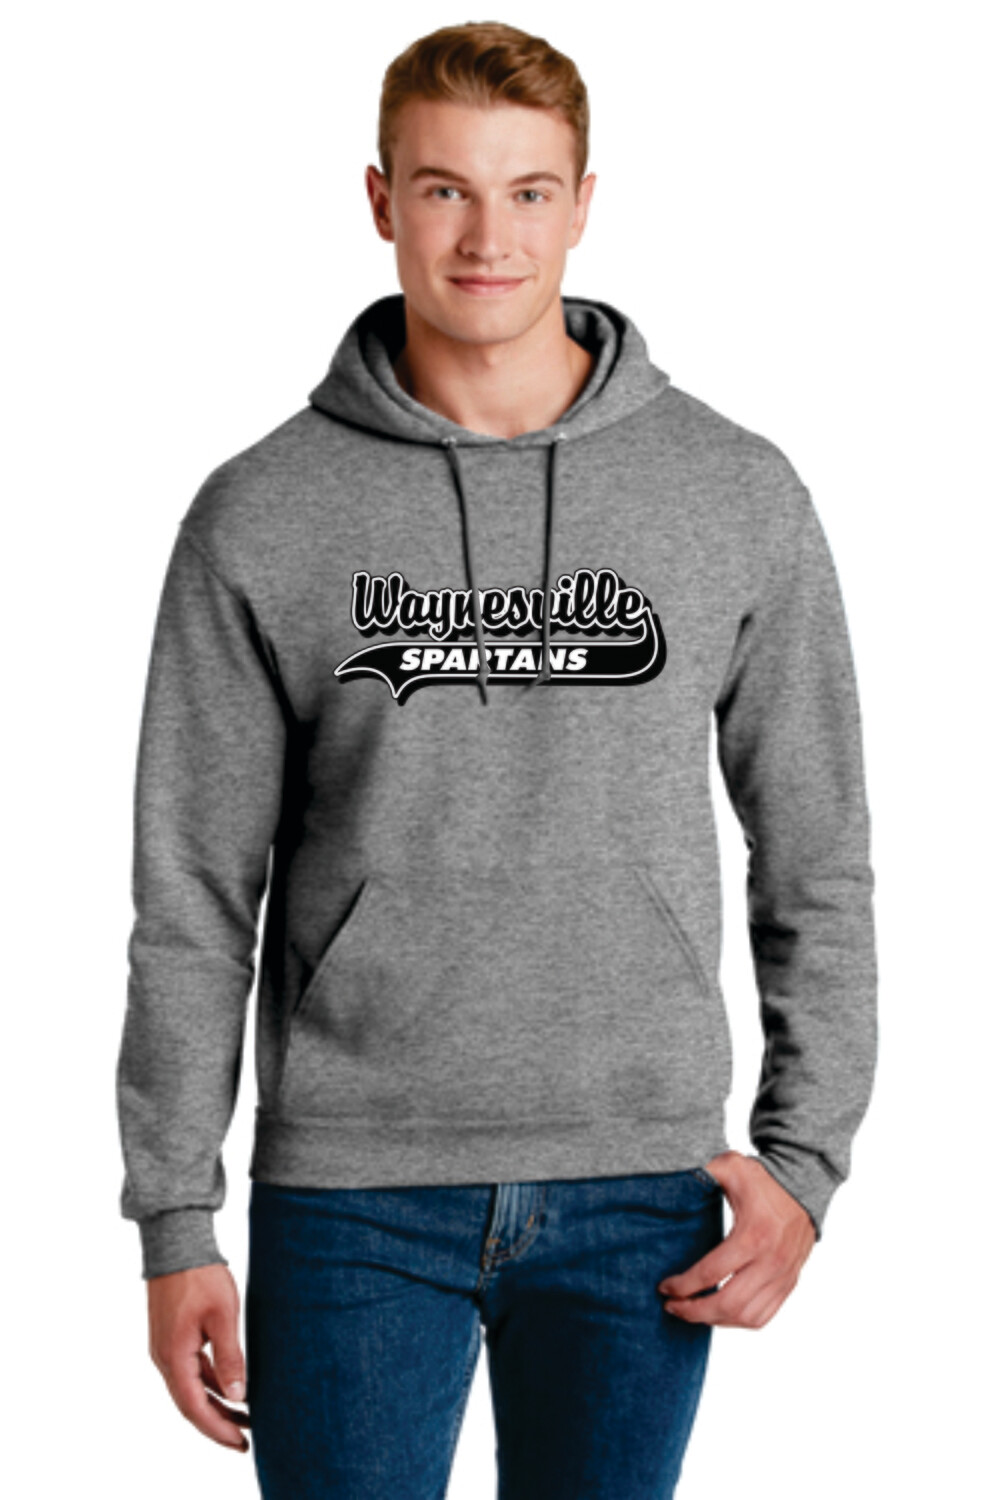 Waynesville Spartans Tail
Hoodie & T-Shirt